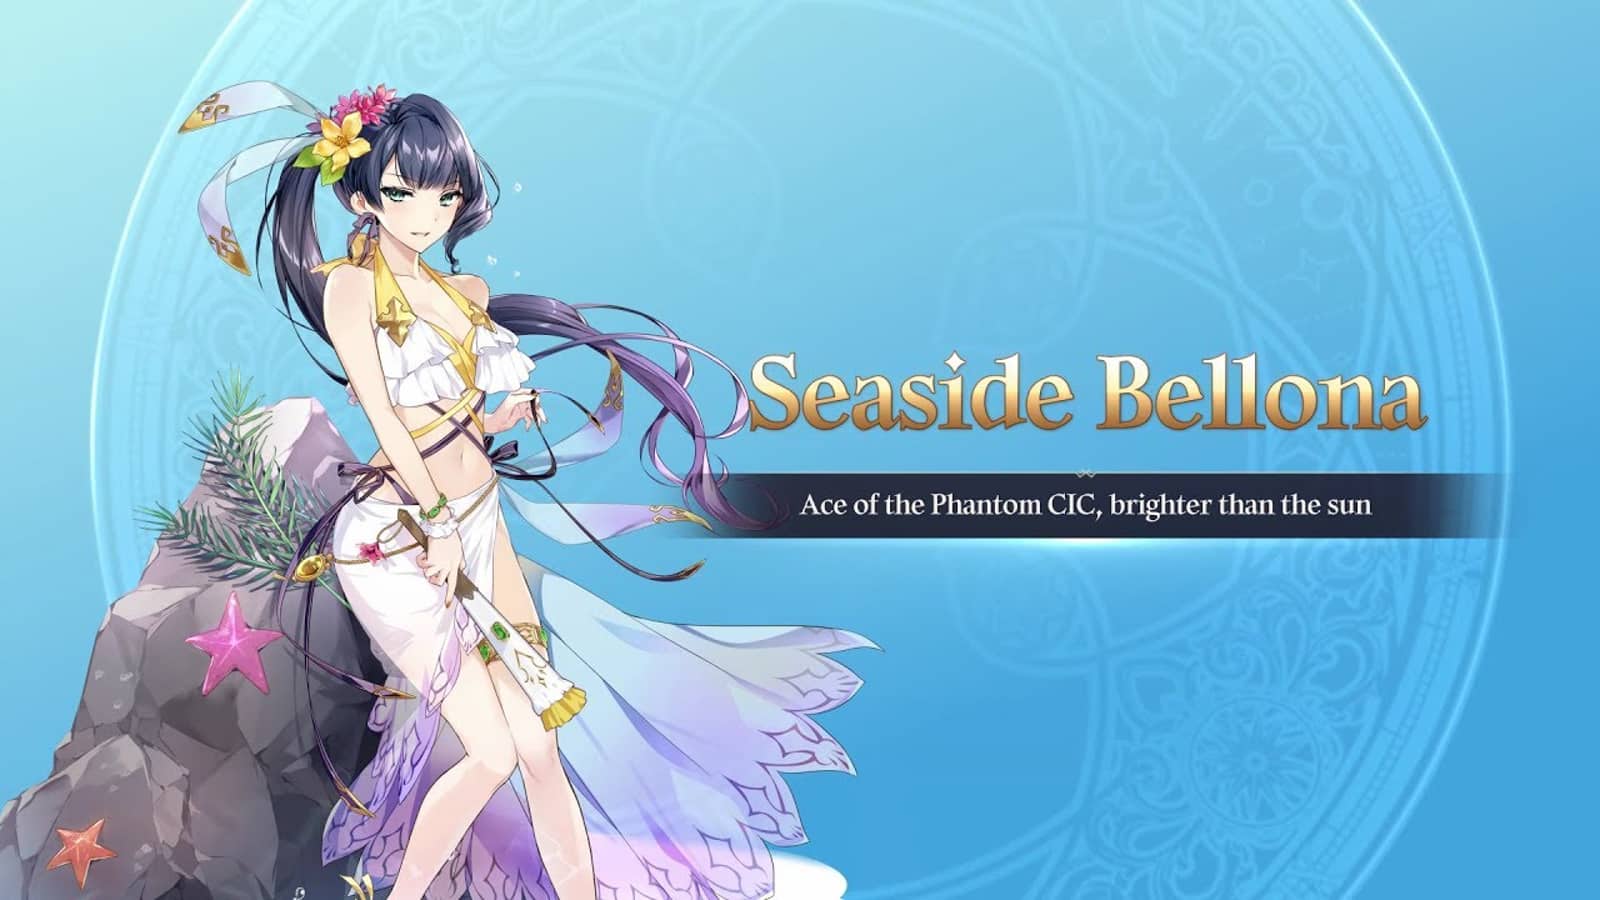 Seaside Bellona from Epic Seven in a beautiful dress